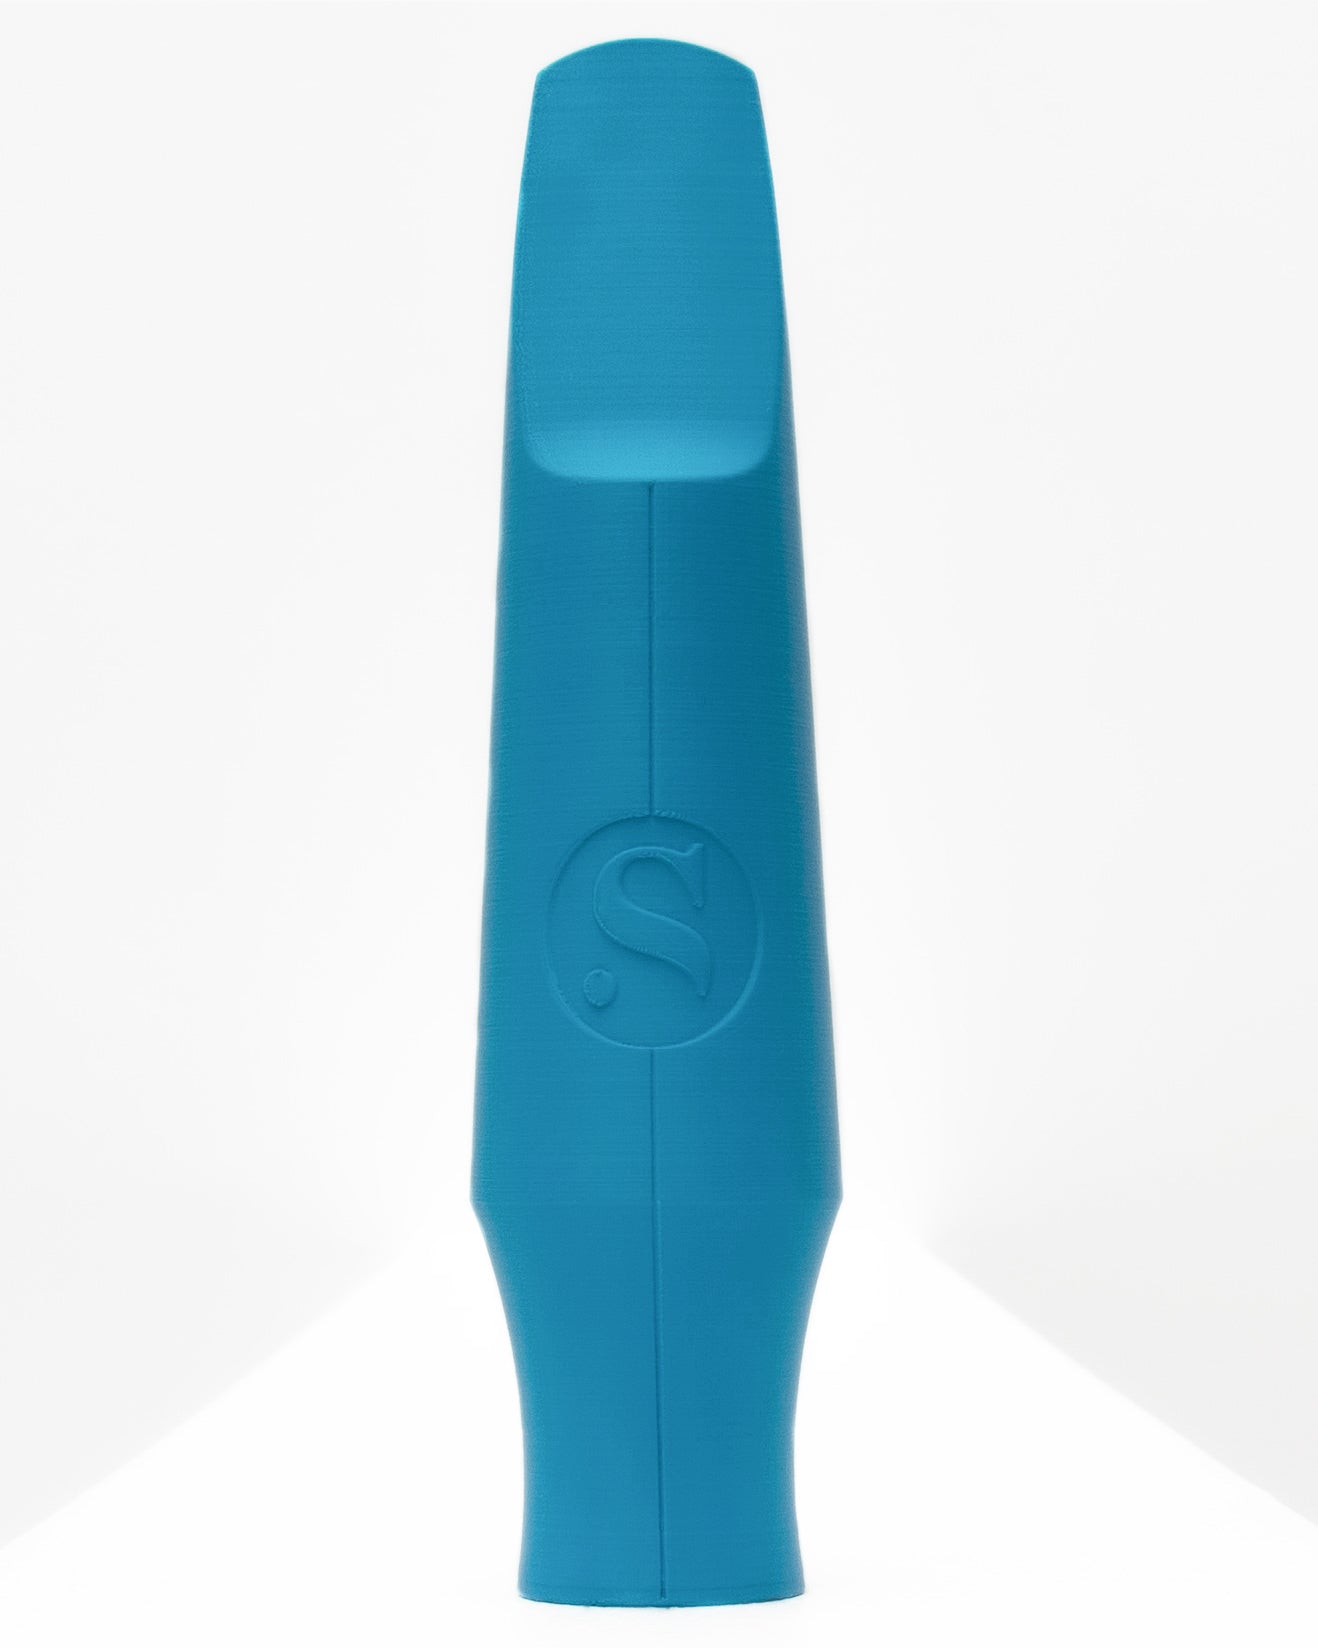 Baritone Originals Saxophone mouthpiece - Spark by Syos - 8 / Sea Blue